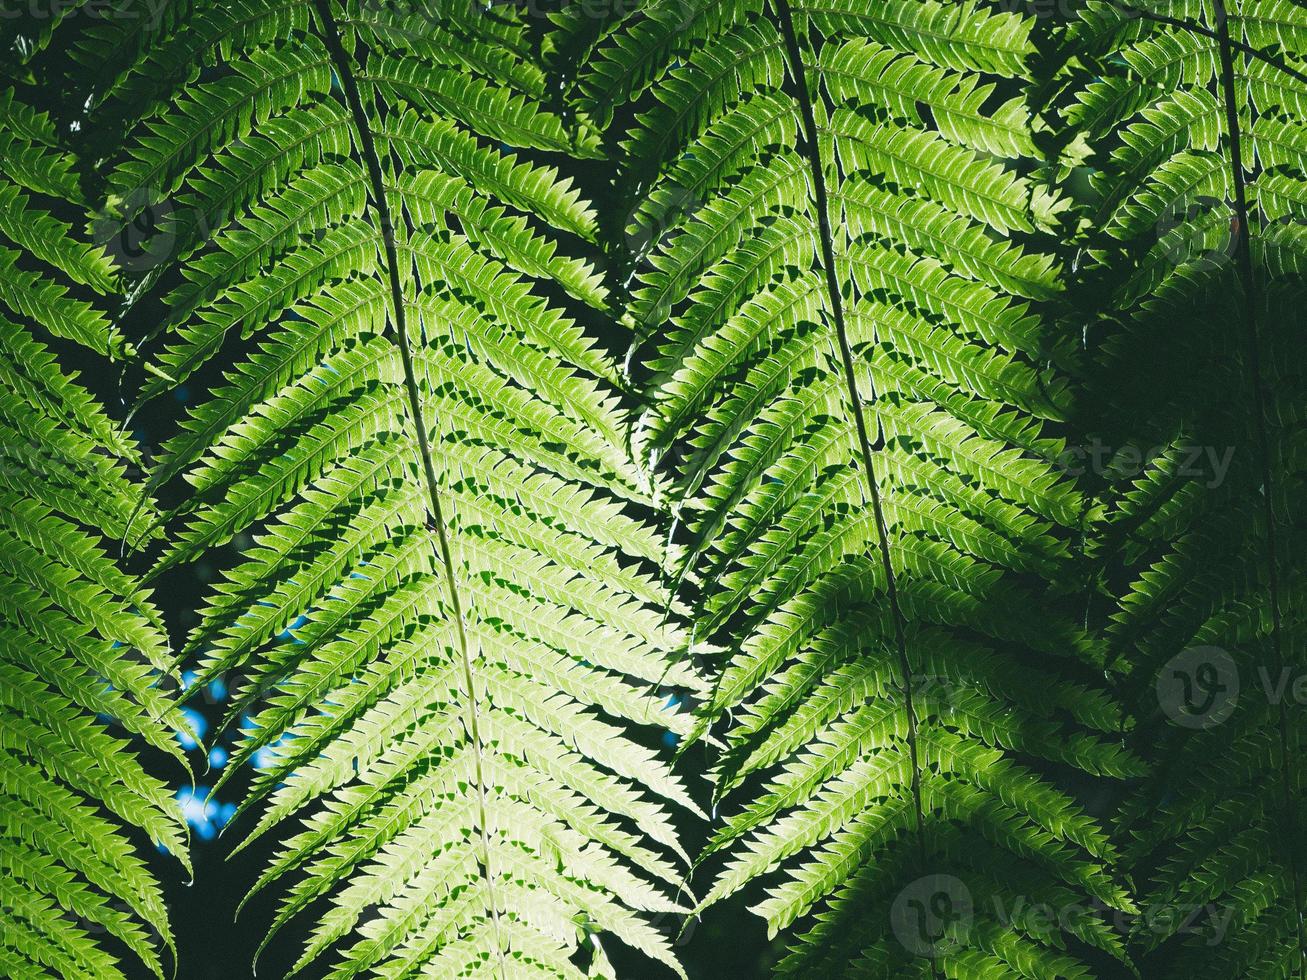 vackra gröna ormbunksblad i nature.rain forest fern bakgrund foto